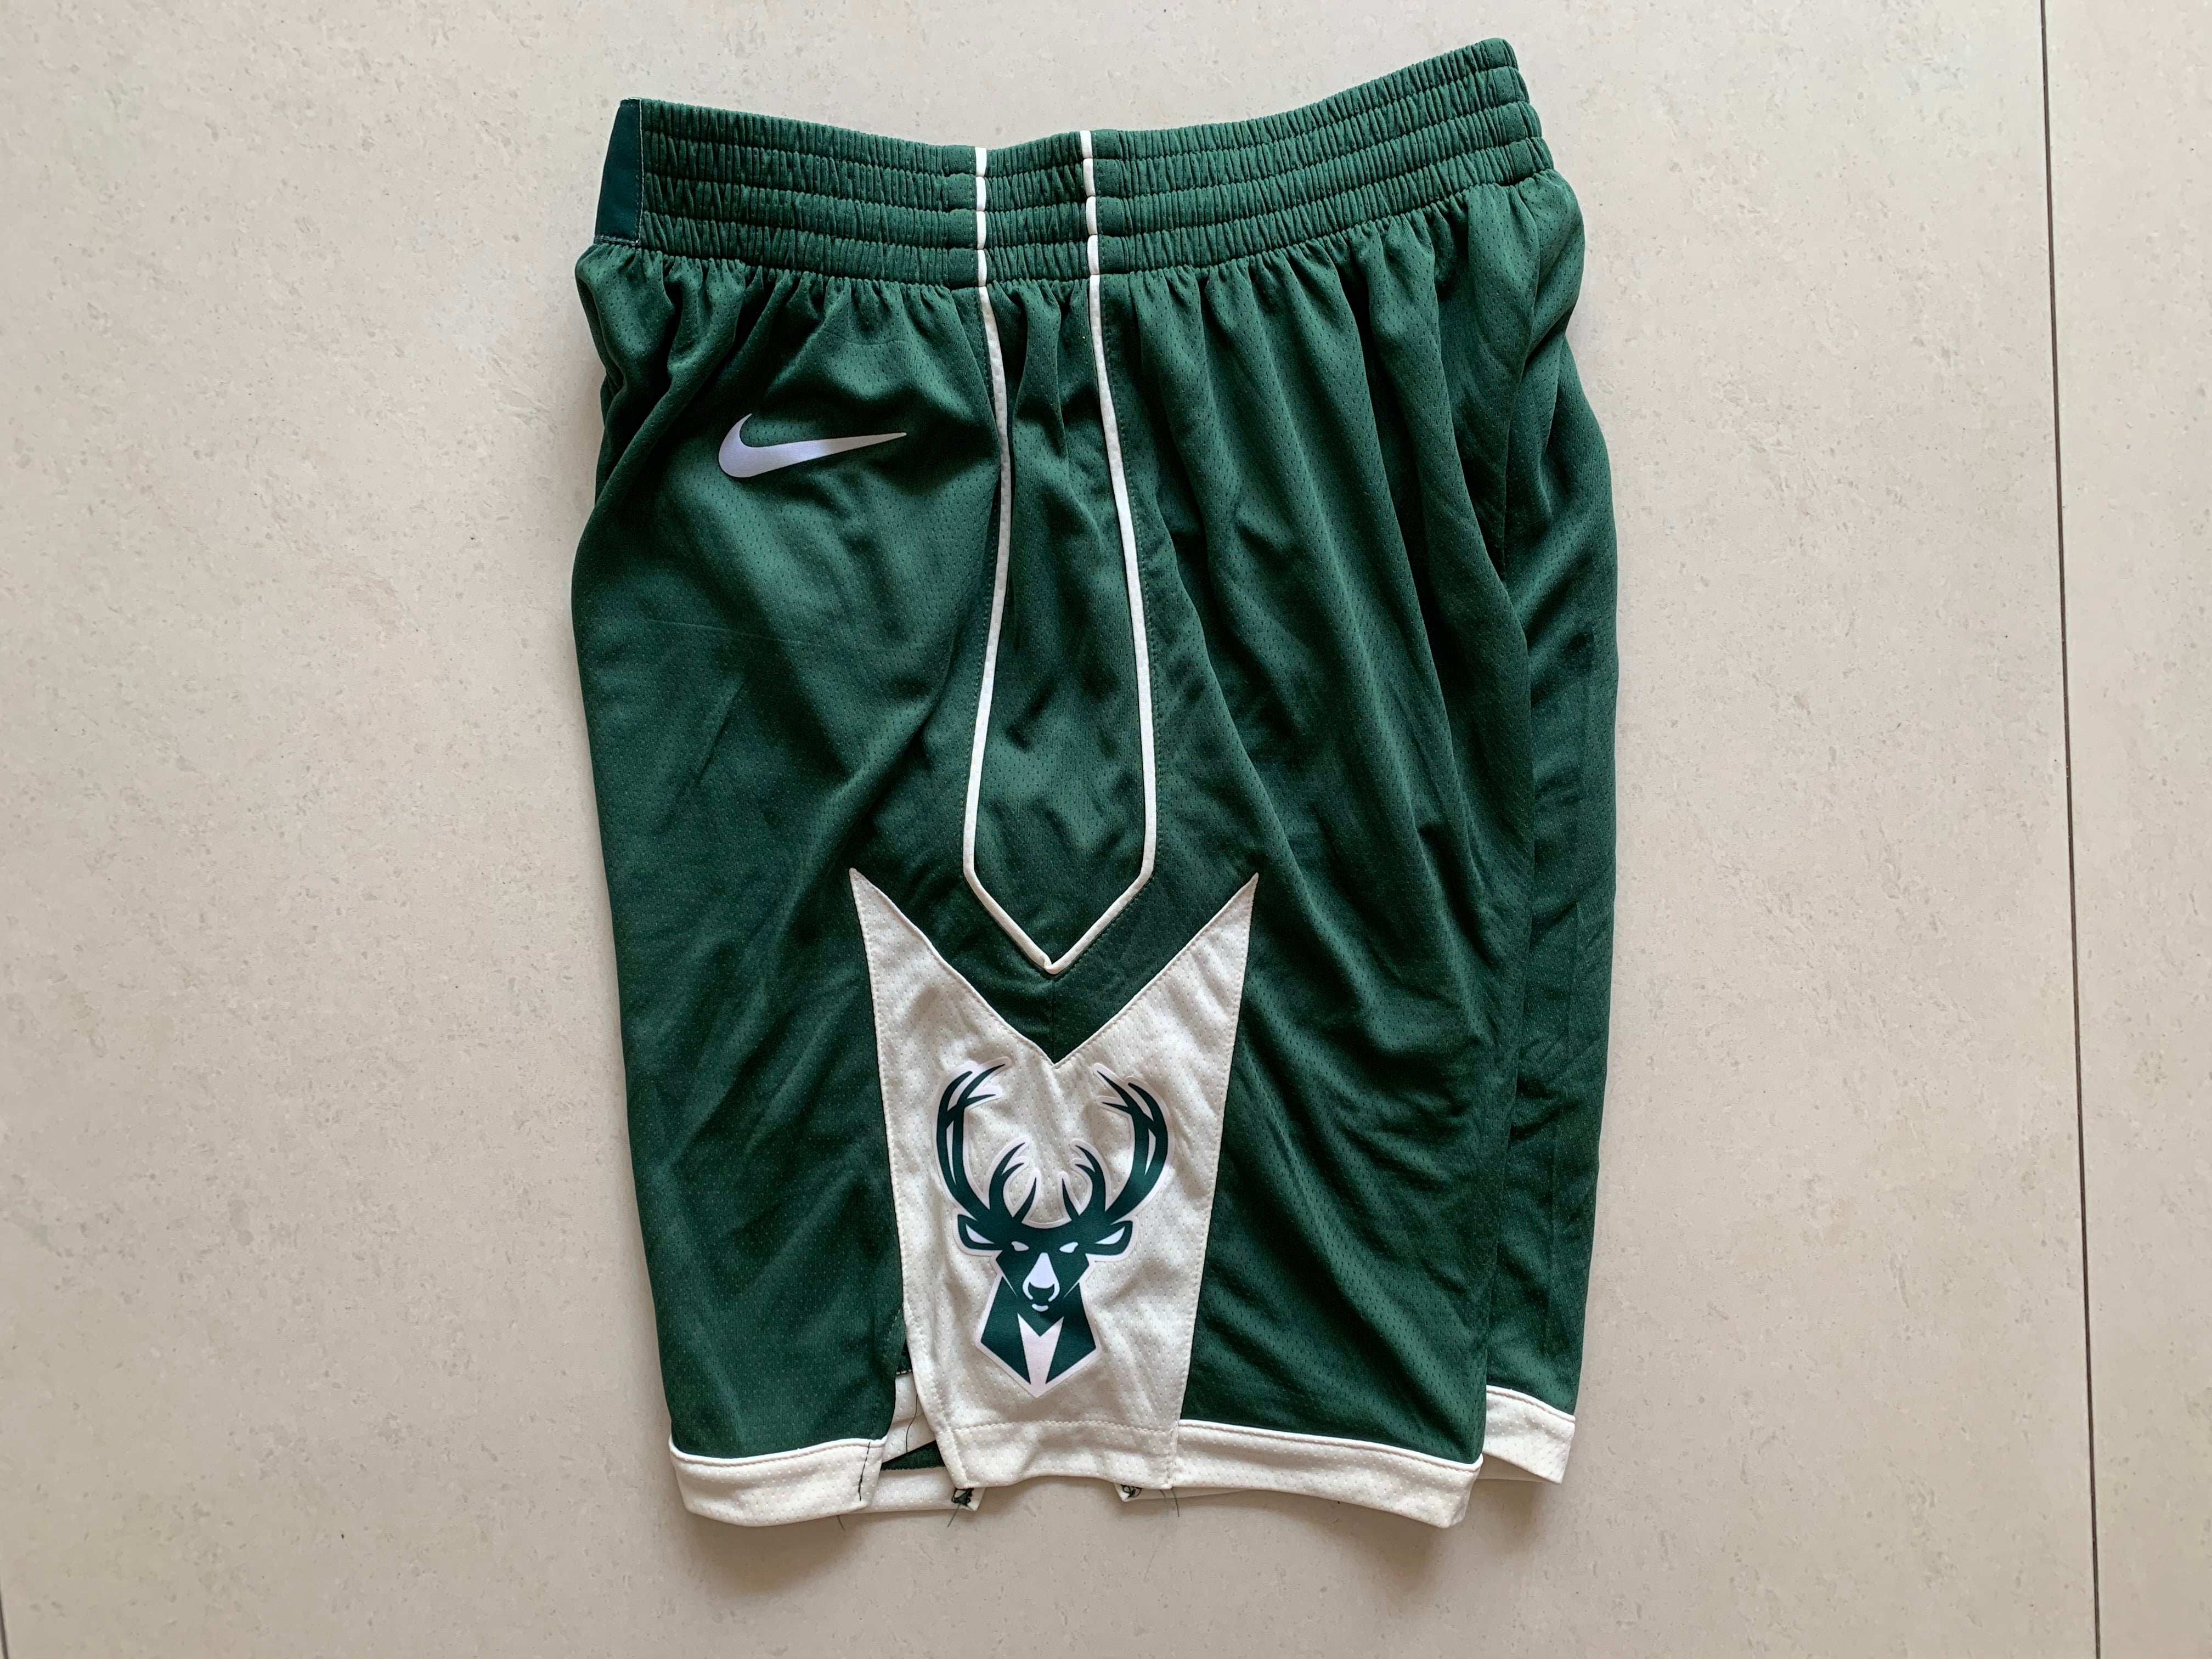 Bucks green shorts